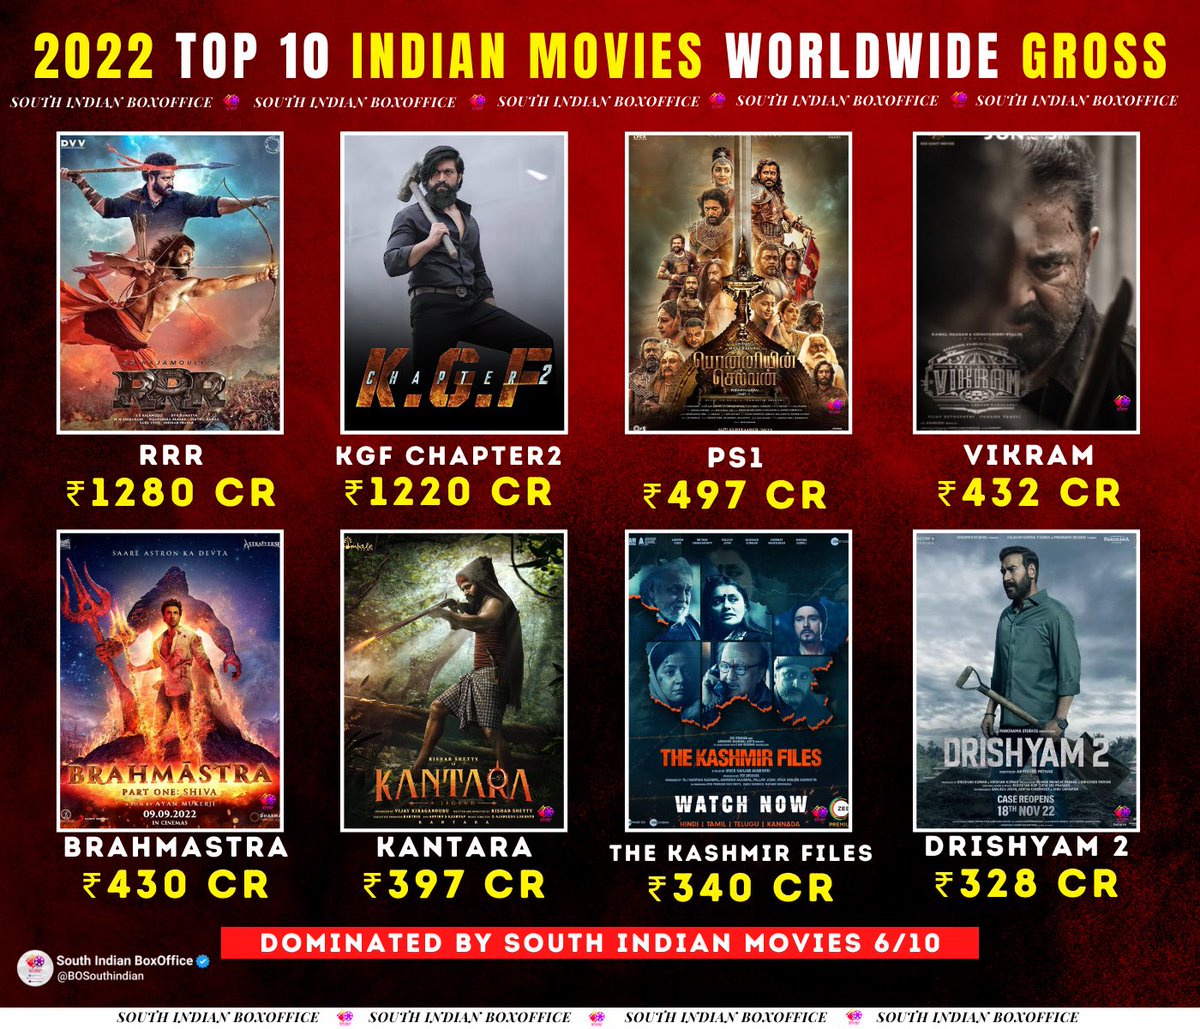 2022 Top 10 Indian Movies Worldwide Gross

1 #RRR: ₹1280 Cr
2 #KGFChapter2 : ₹1220 Cr
3 #PonniyinSelvan1: ₹497 Cr
4 #Vikram: ₹432 Cr
5 #Brahmastra: ₹430 Cr
6 #Kantara: ₹397 Cr
7 #TheKashmirFiles: ₹340 Cr
8 #Drishyam2: ₹328 Cr
9 #BhoolBhulaiyaa2: ₹267 Cr
10 #Beast: ₹230…